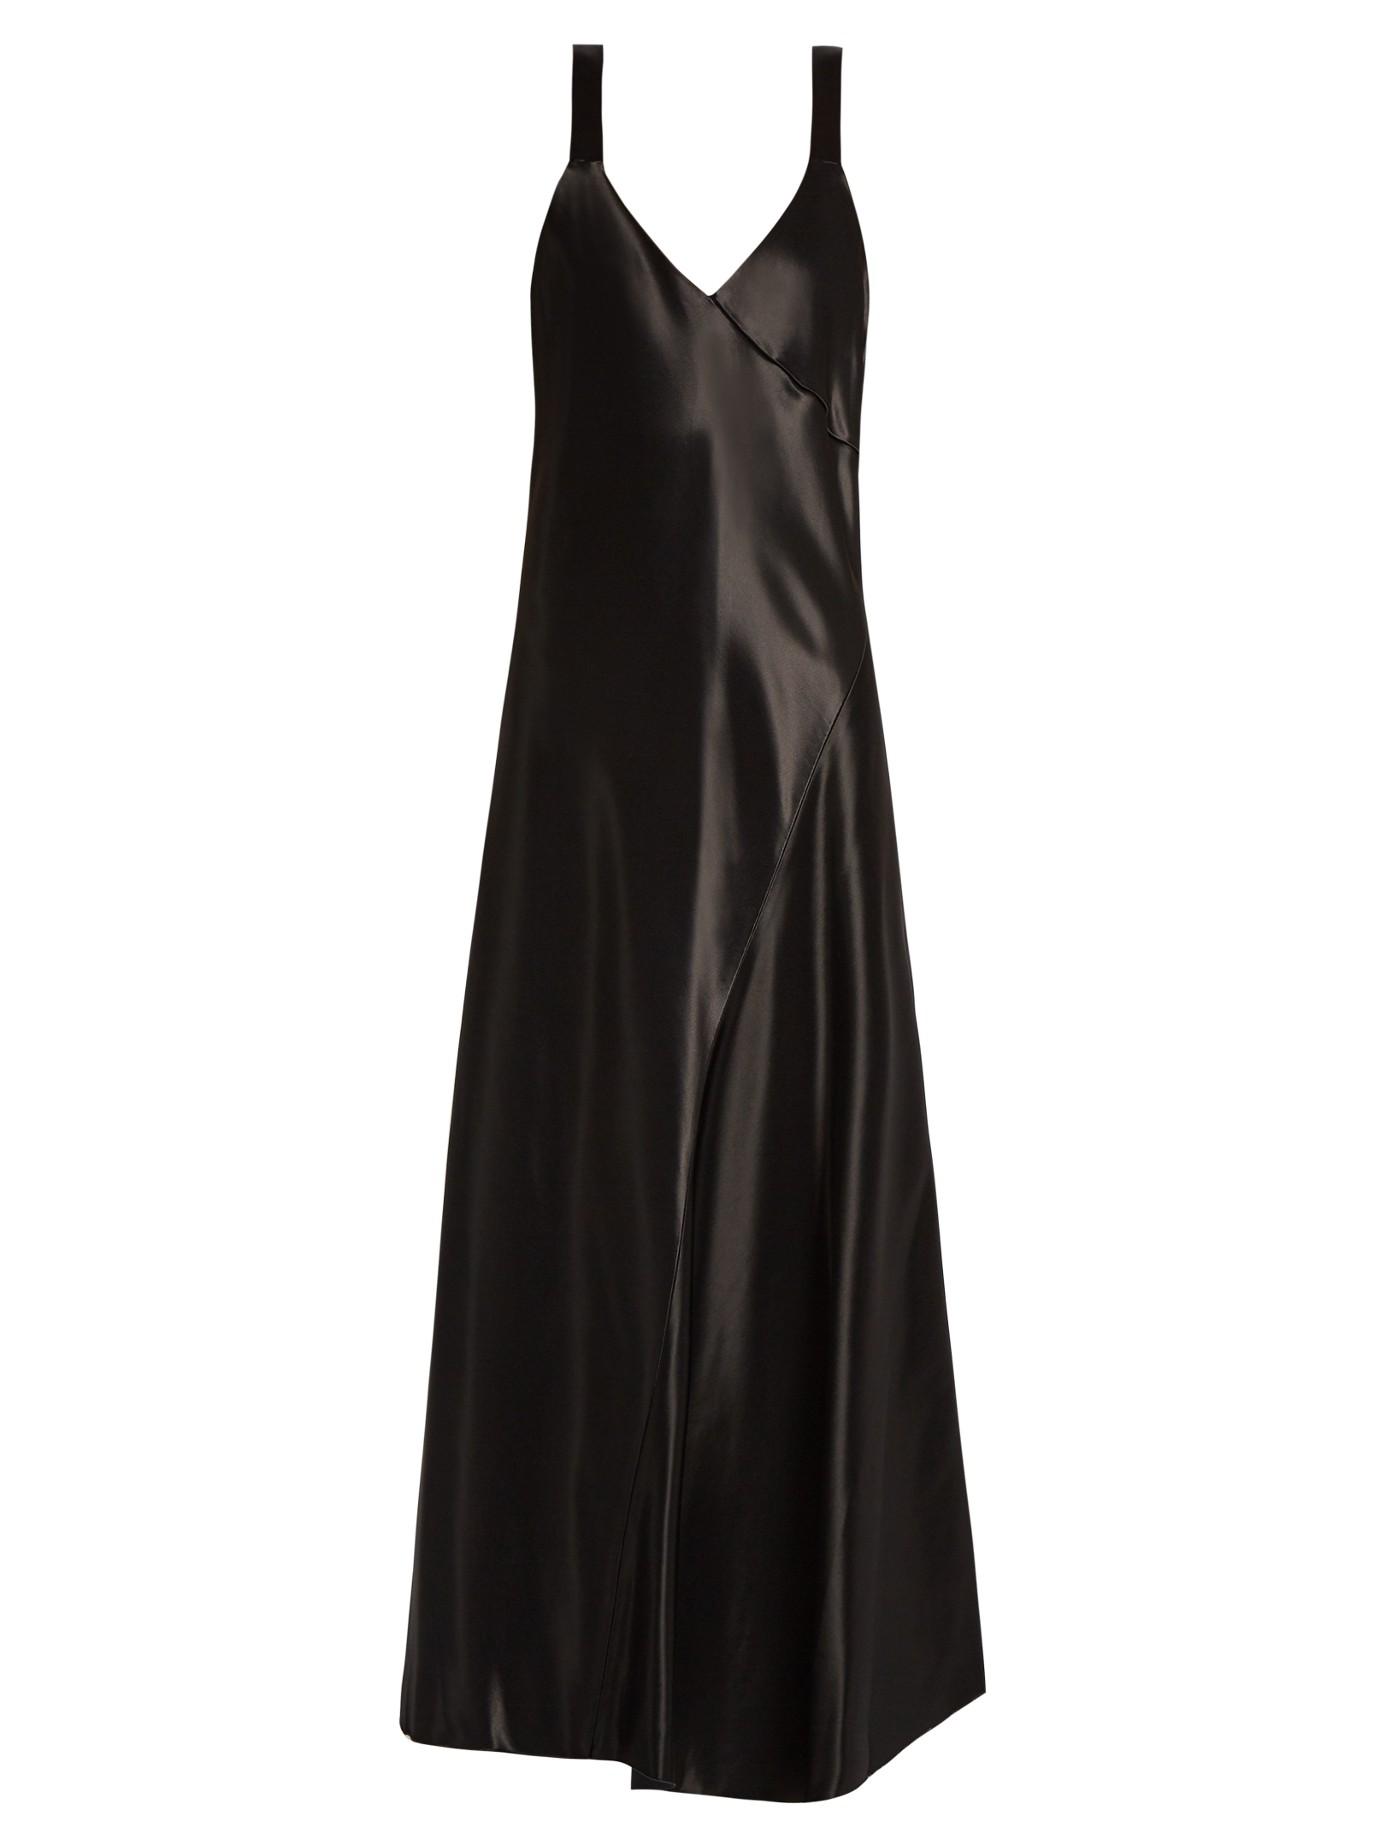 Tibi Amoret V-neck Bias-cut Satin Dress in Black - Lyst